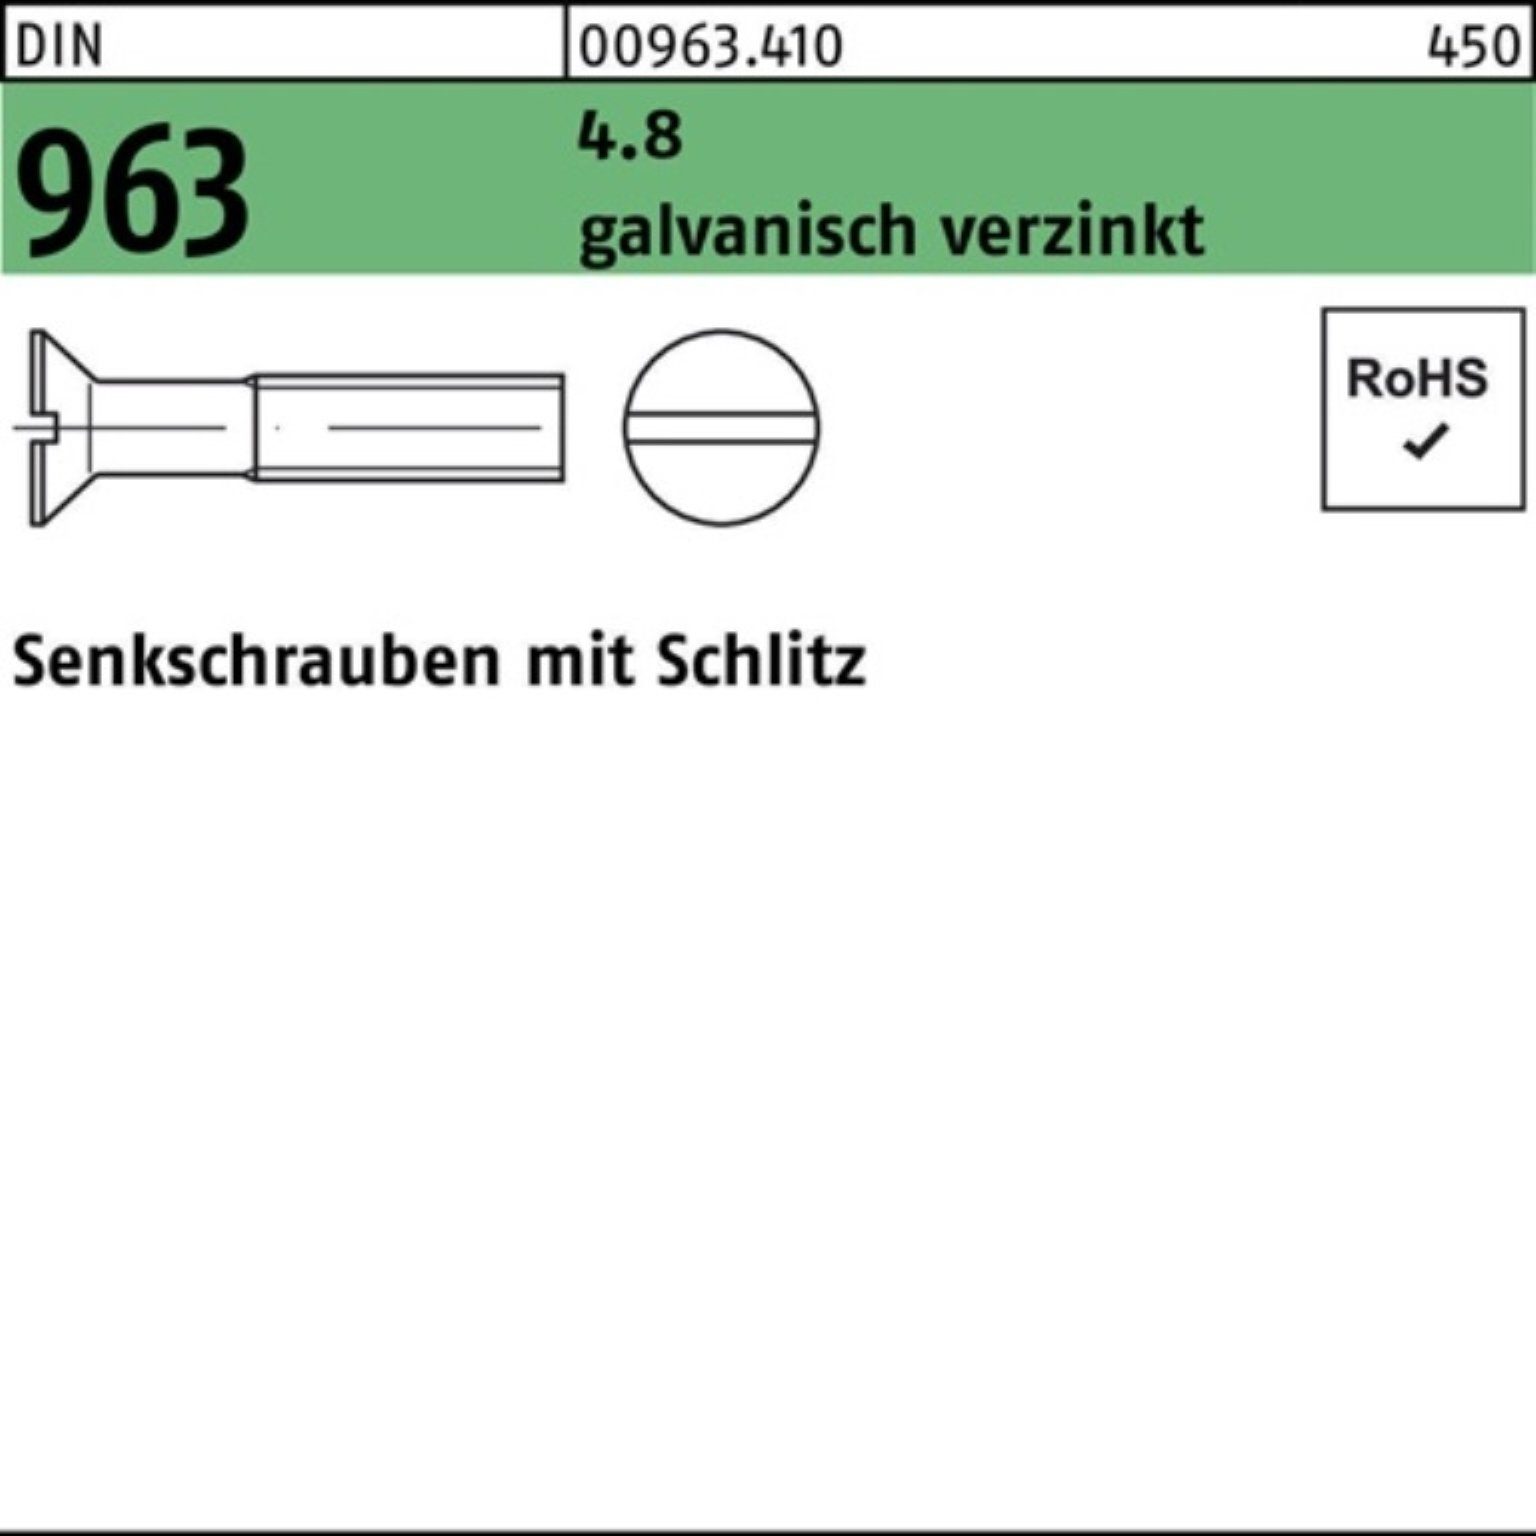 Reyher Senkschraube Senkschraube 4.8 100 Schlitz 963 100er DIN 80 Stü Pack galv.verz. M5x